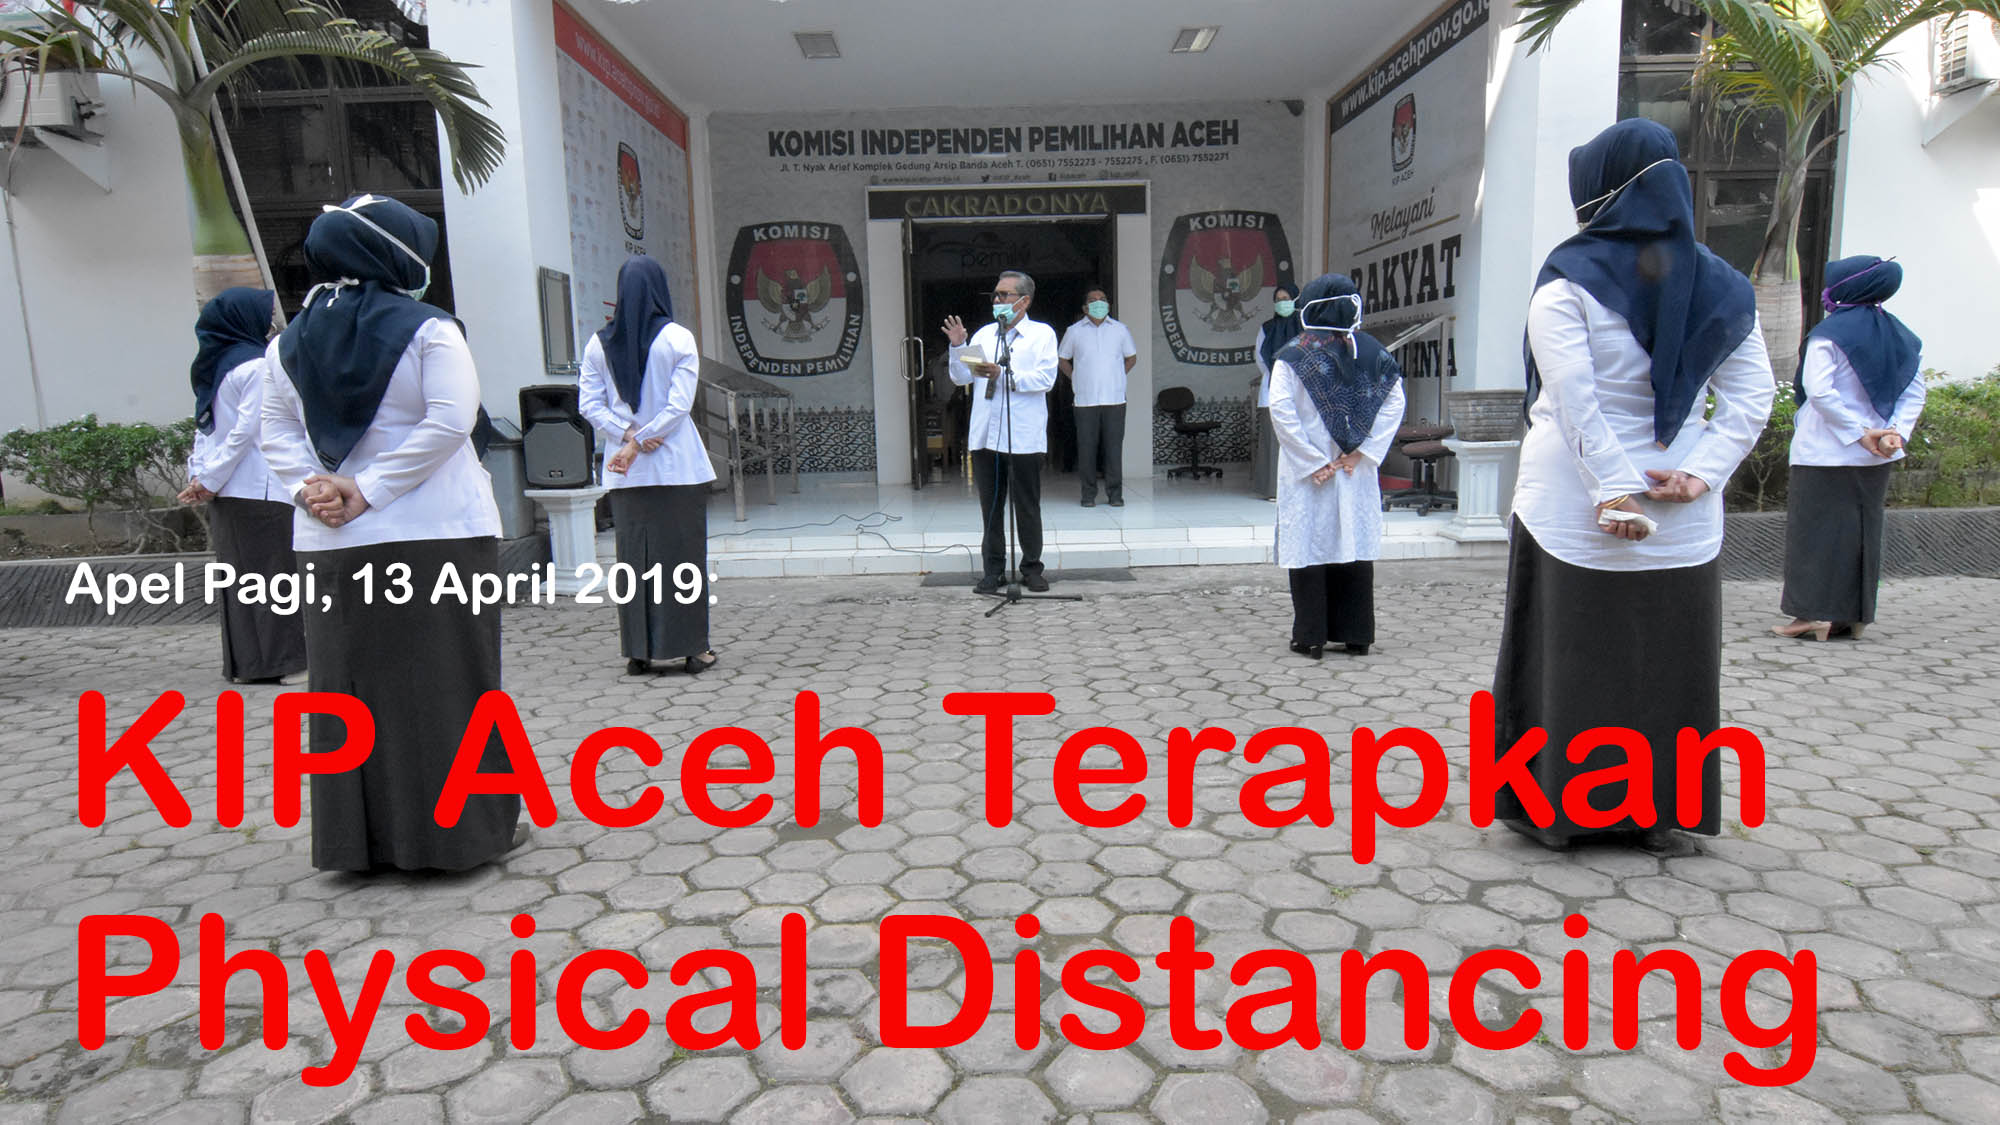 Video: Suasana Apel Senin KIP Aceh, Physical Distancing dan Bagi-bagi Masker